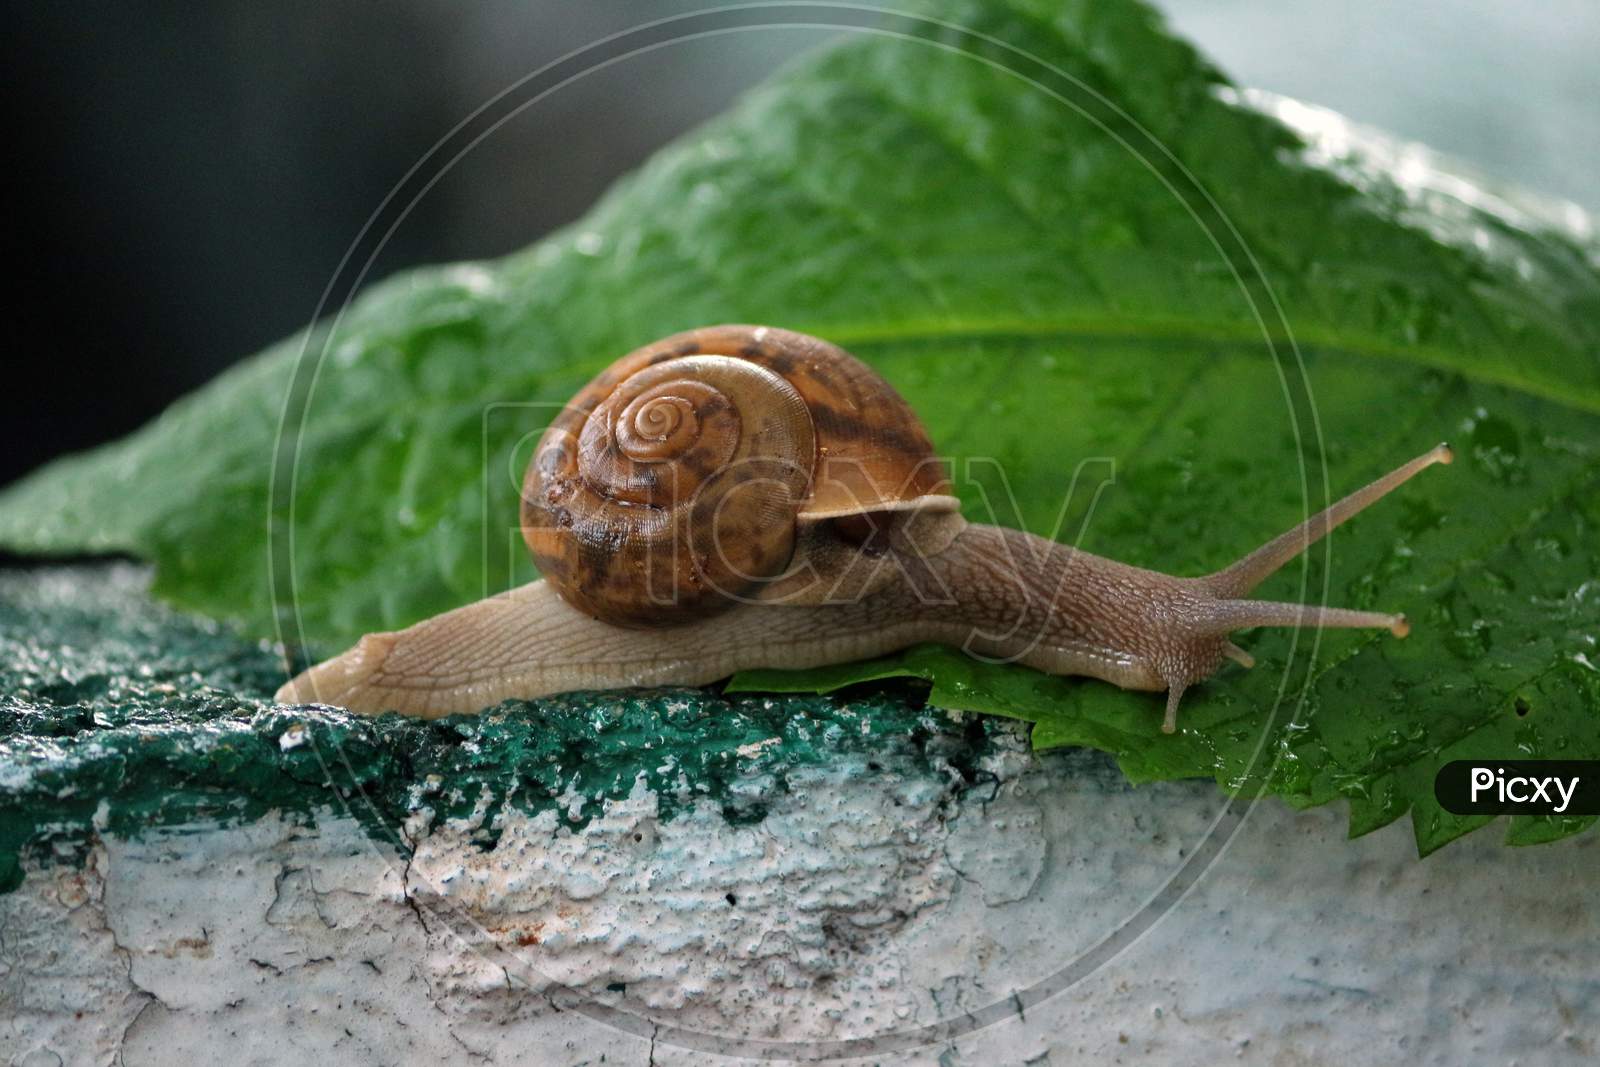 a cute snail walking on a leaf